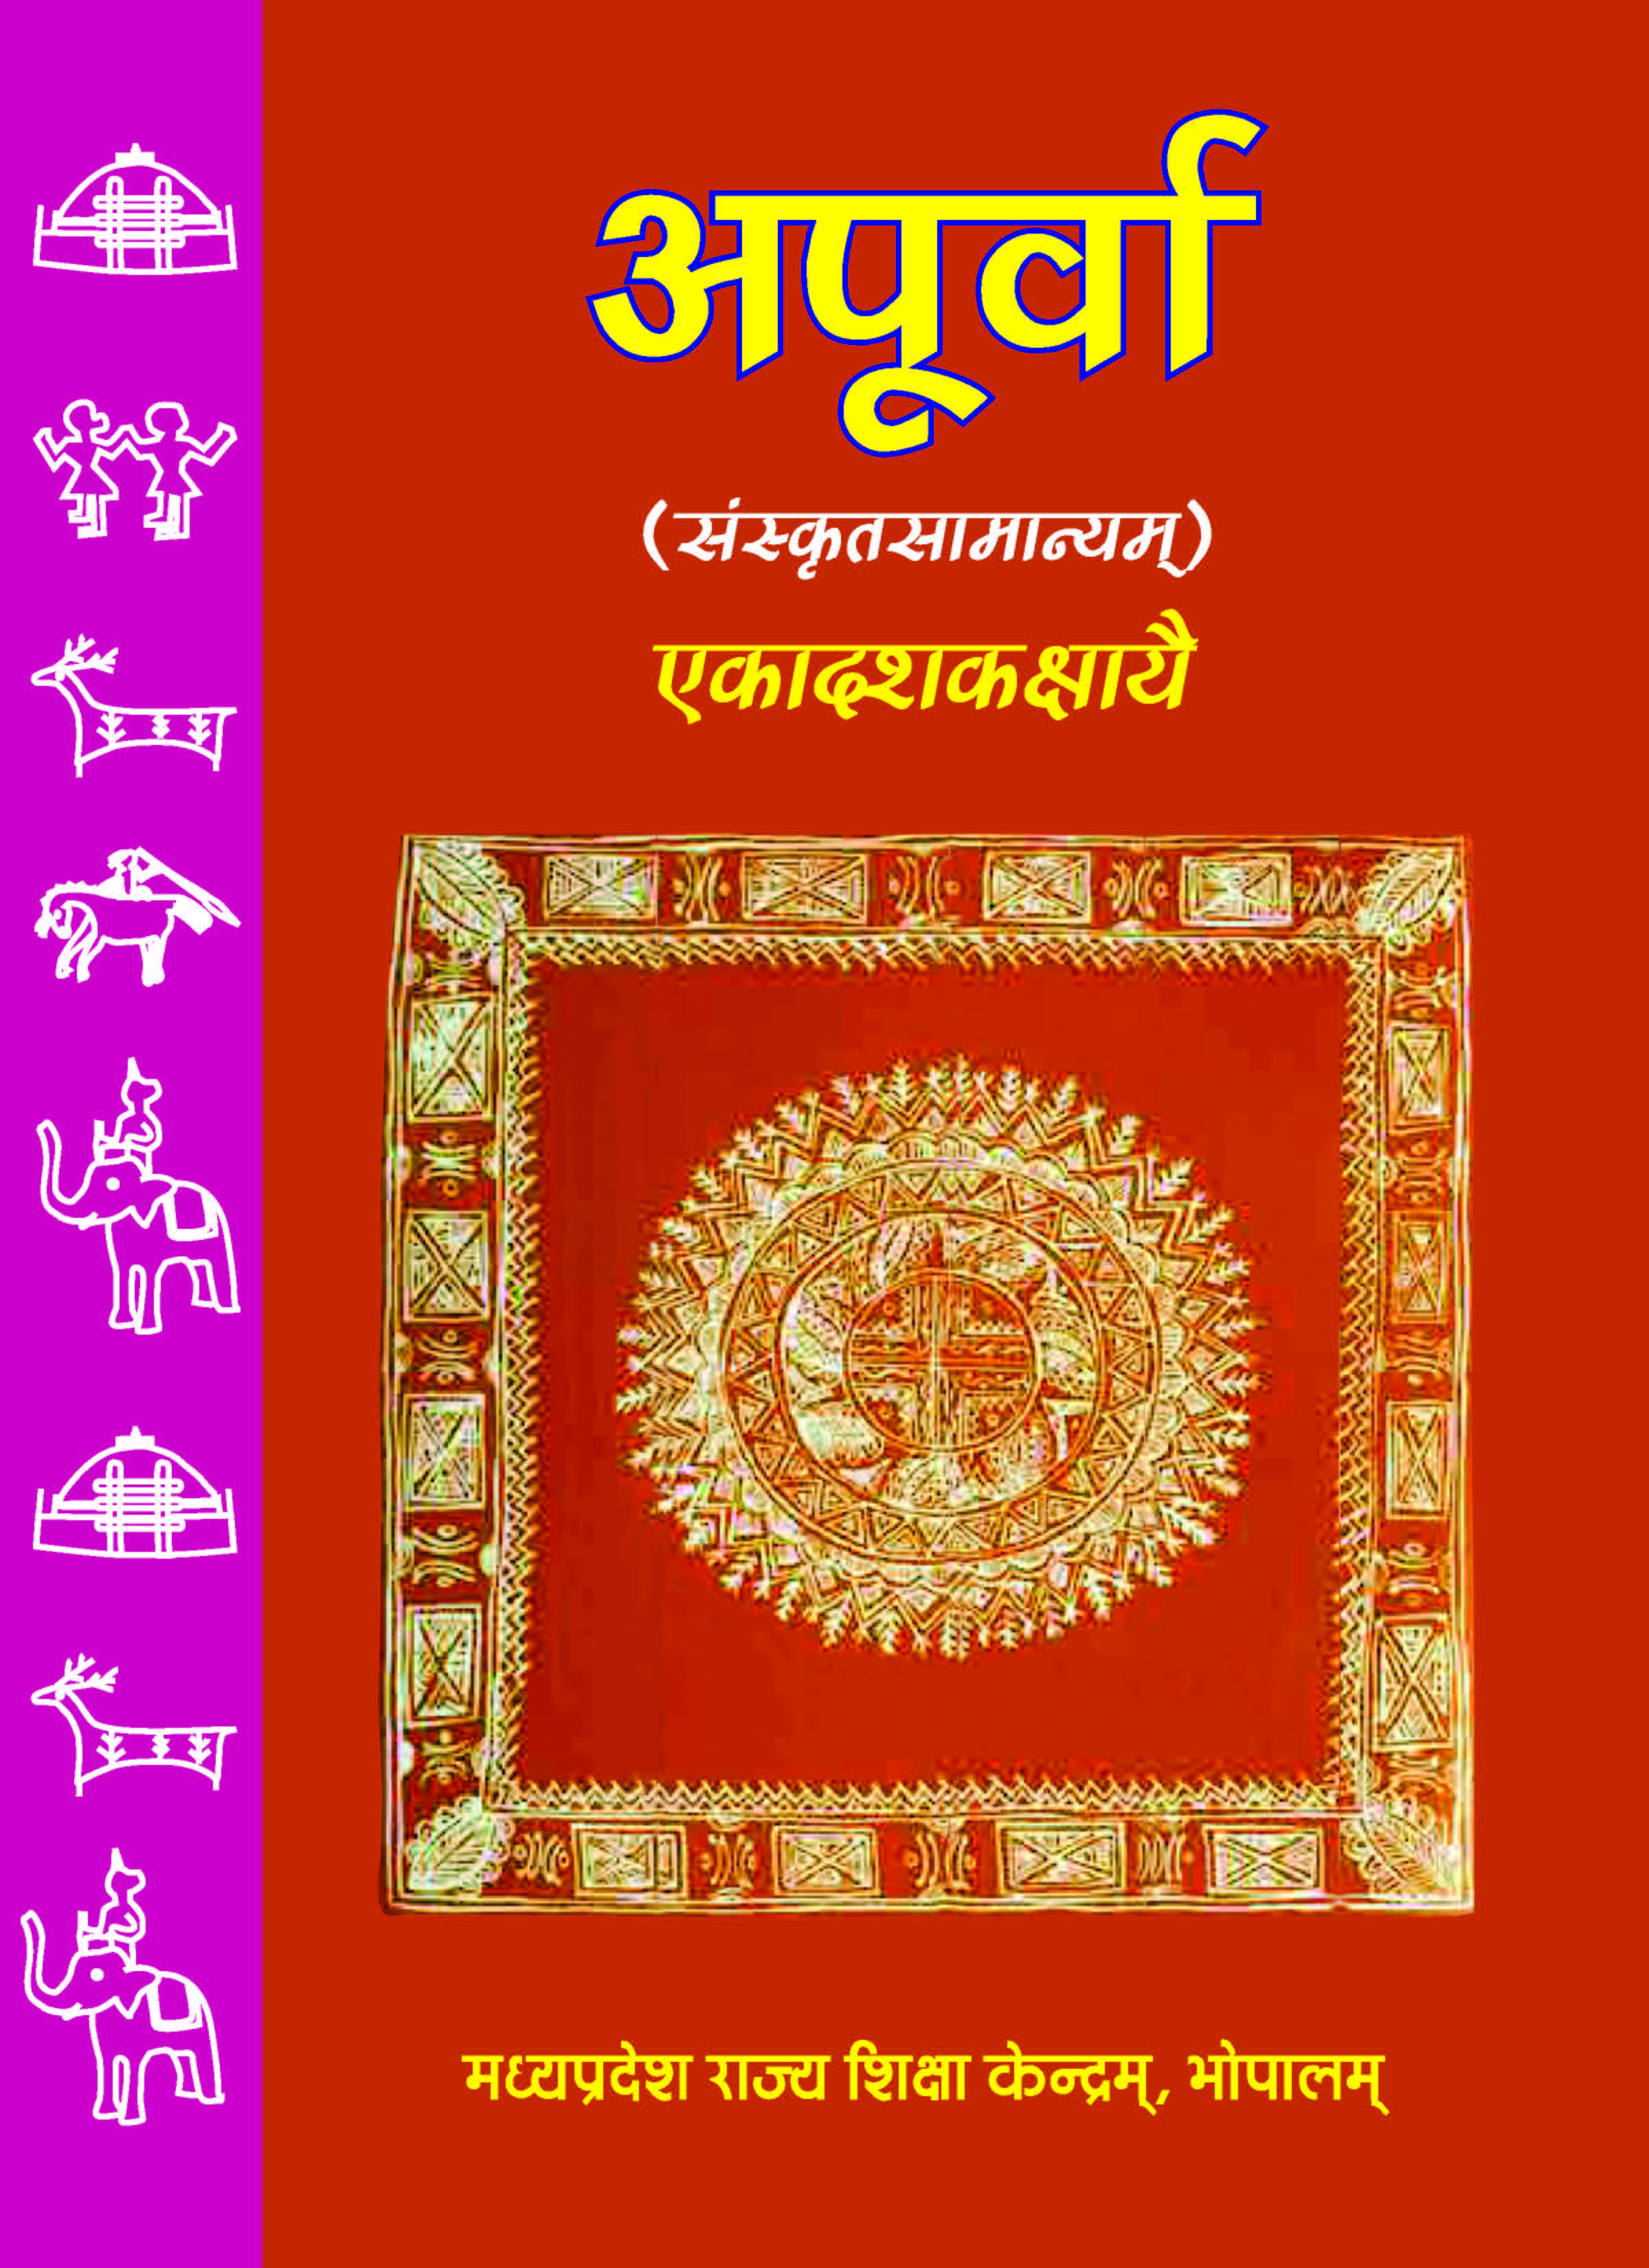 अपूर्वा (संस्कृतसामान्यम्), कक्षा-11 | Apurva (SanskritSamanyam), Class-11